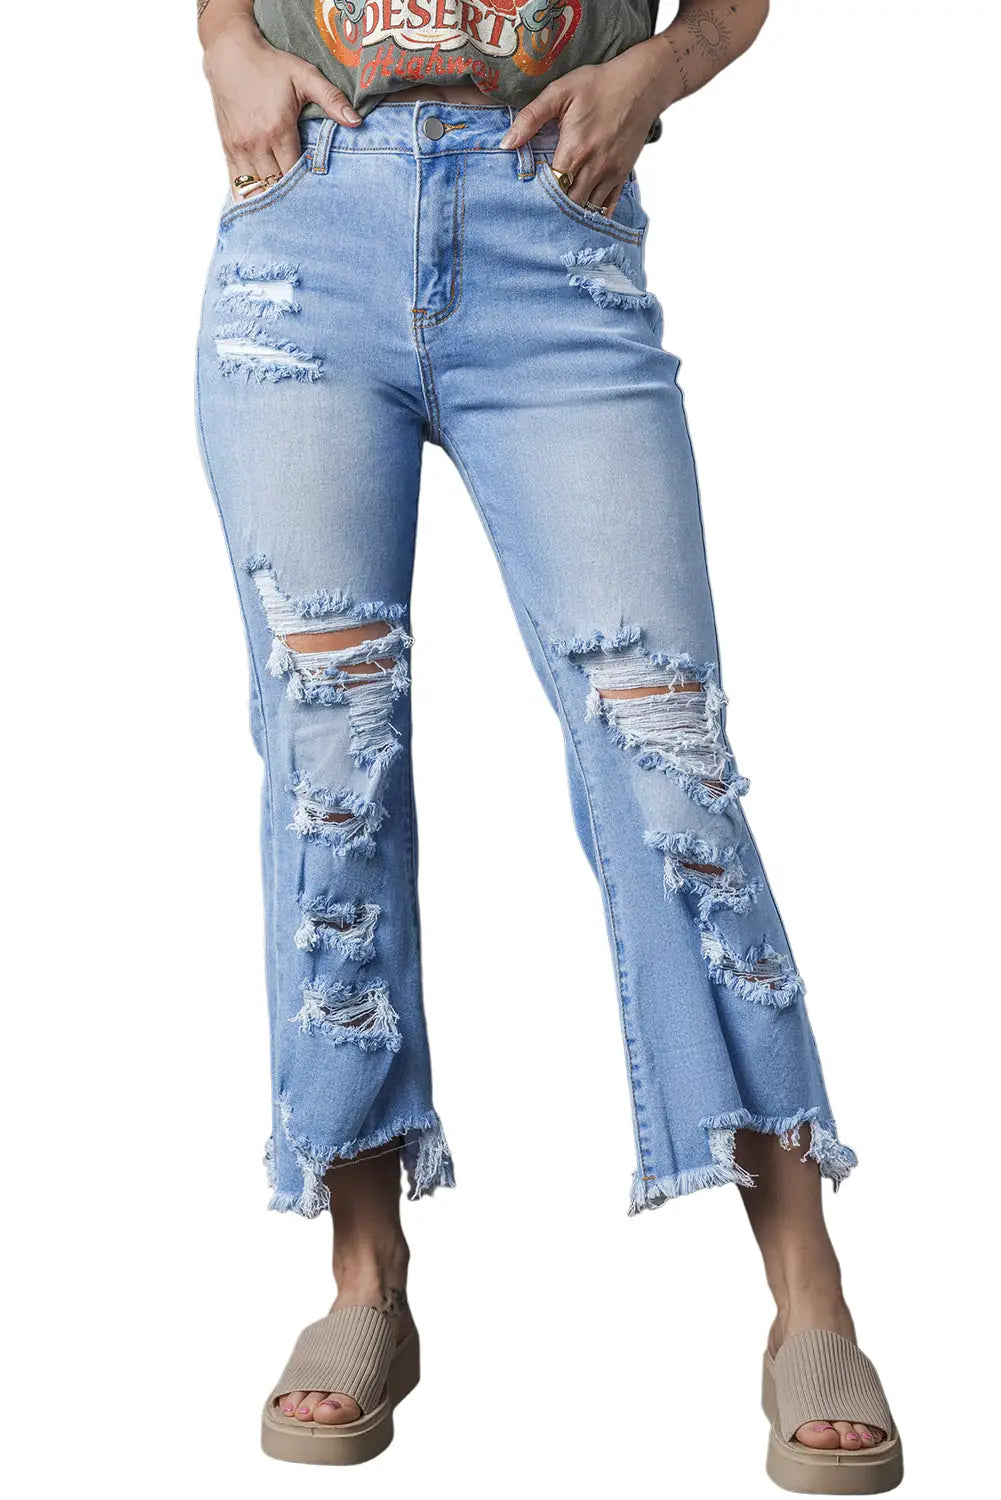 Sky blue heavy destroyed high waist jeans - bottoms